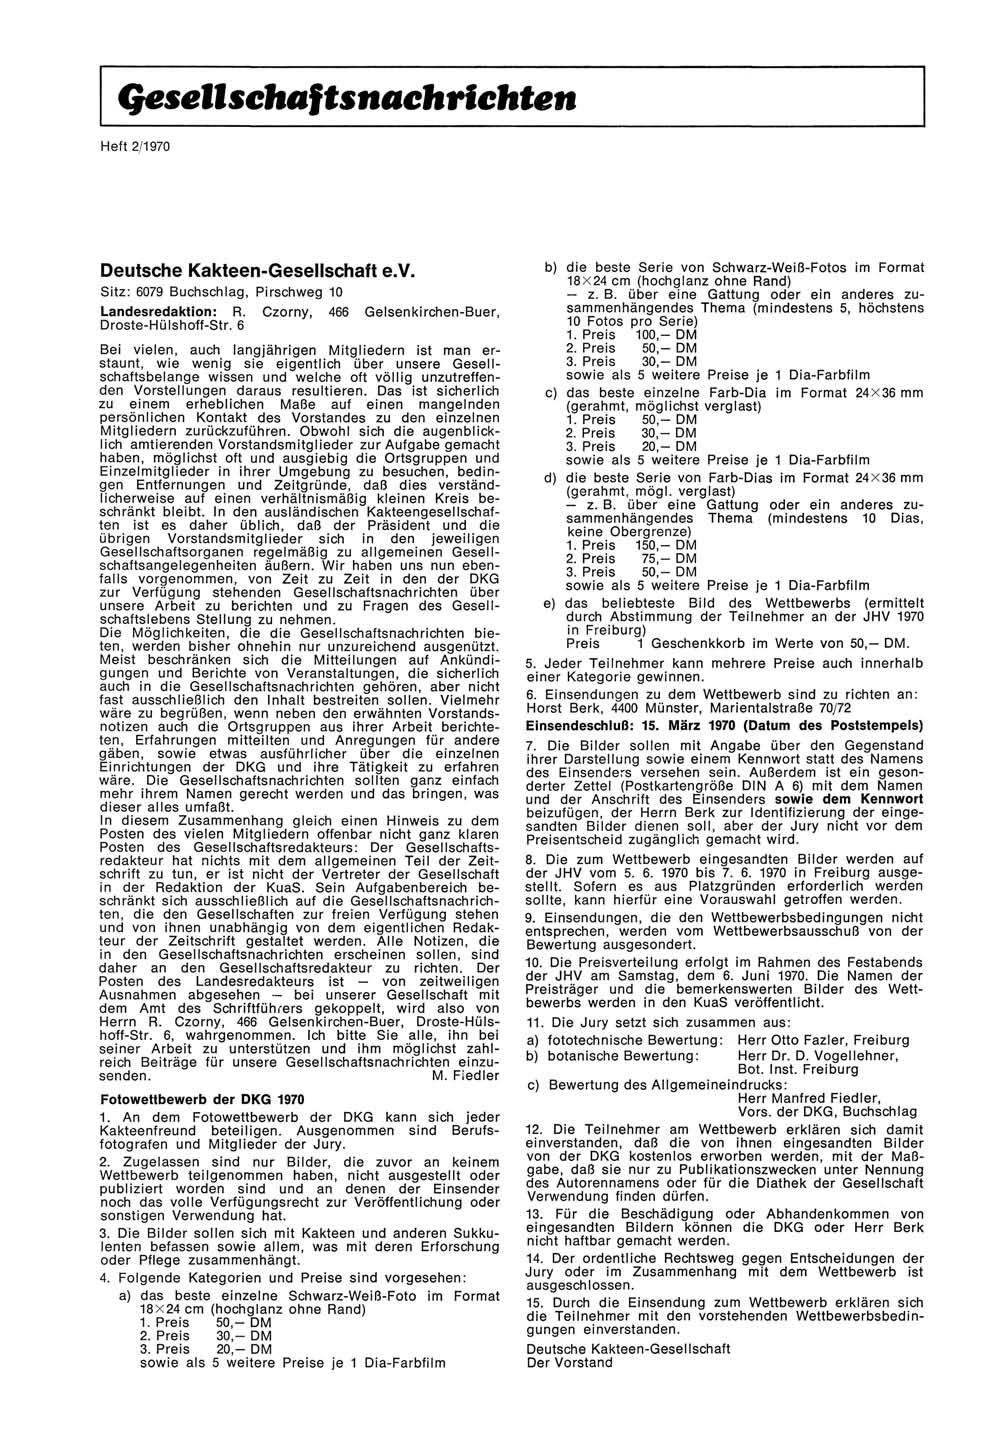 Gesetîschaftsnachrichten Heft 2/1970 Deutsche Kakteen-Gesellschaft e.v. Sitz: 6079 Buchschlag, Pirschweg 10 Landesredaktion: R. Czorny, 466 Gelsenkirchen-Buer, Droste-Hülshoff-Str.